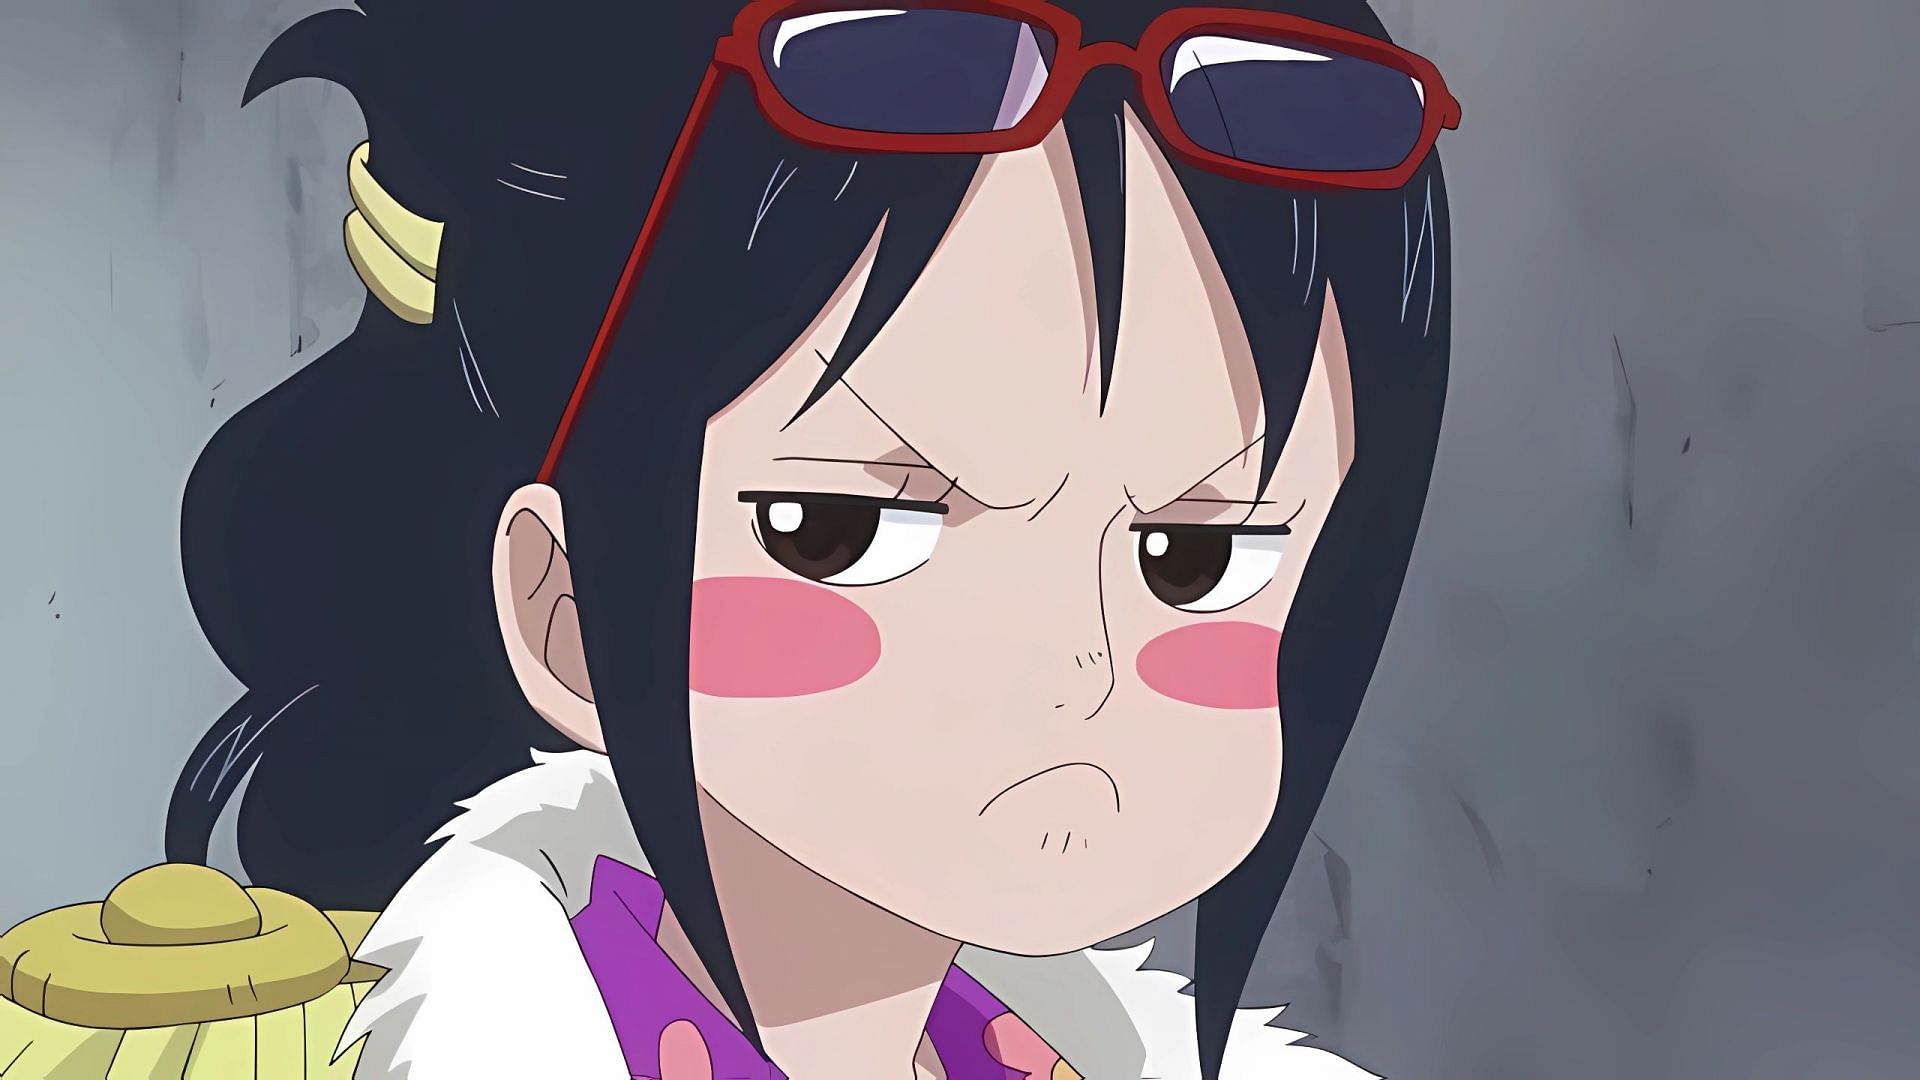 Tashigi as seen in the One Piece (Image via Toei Animation)